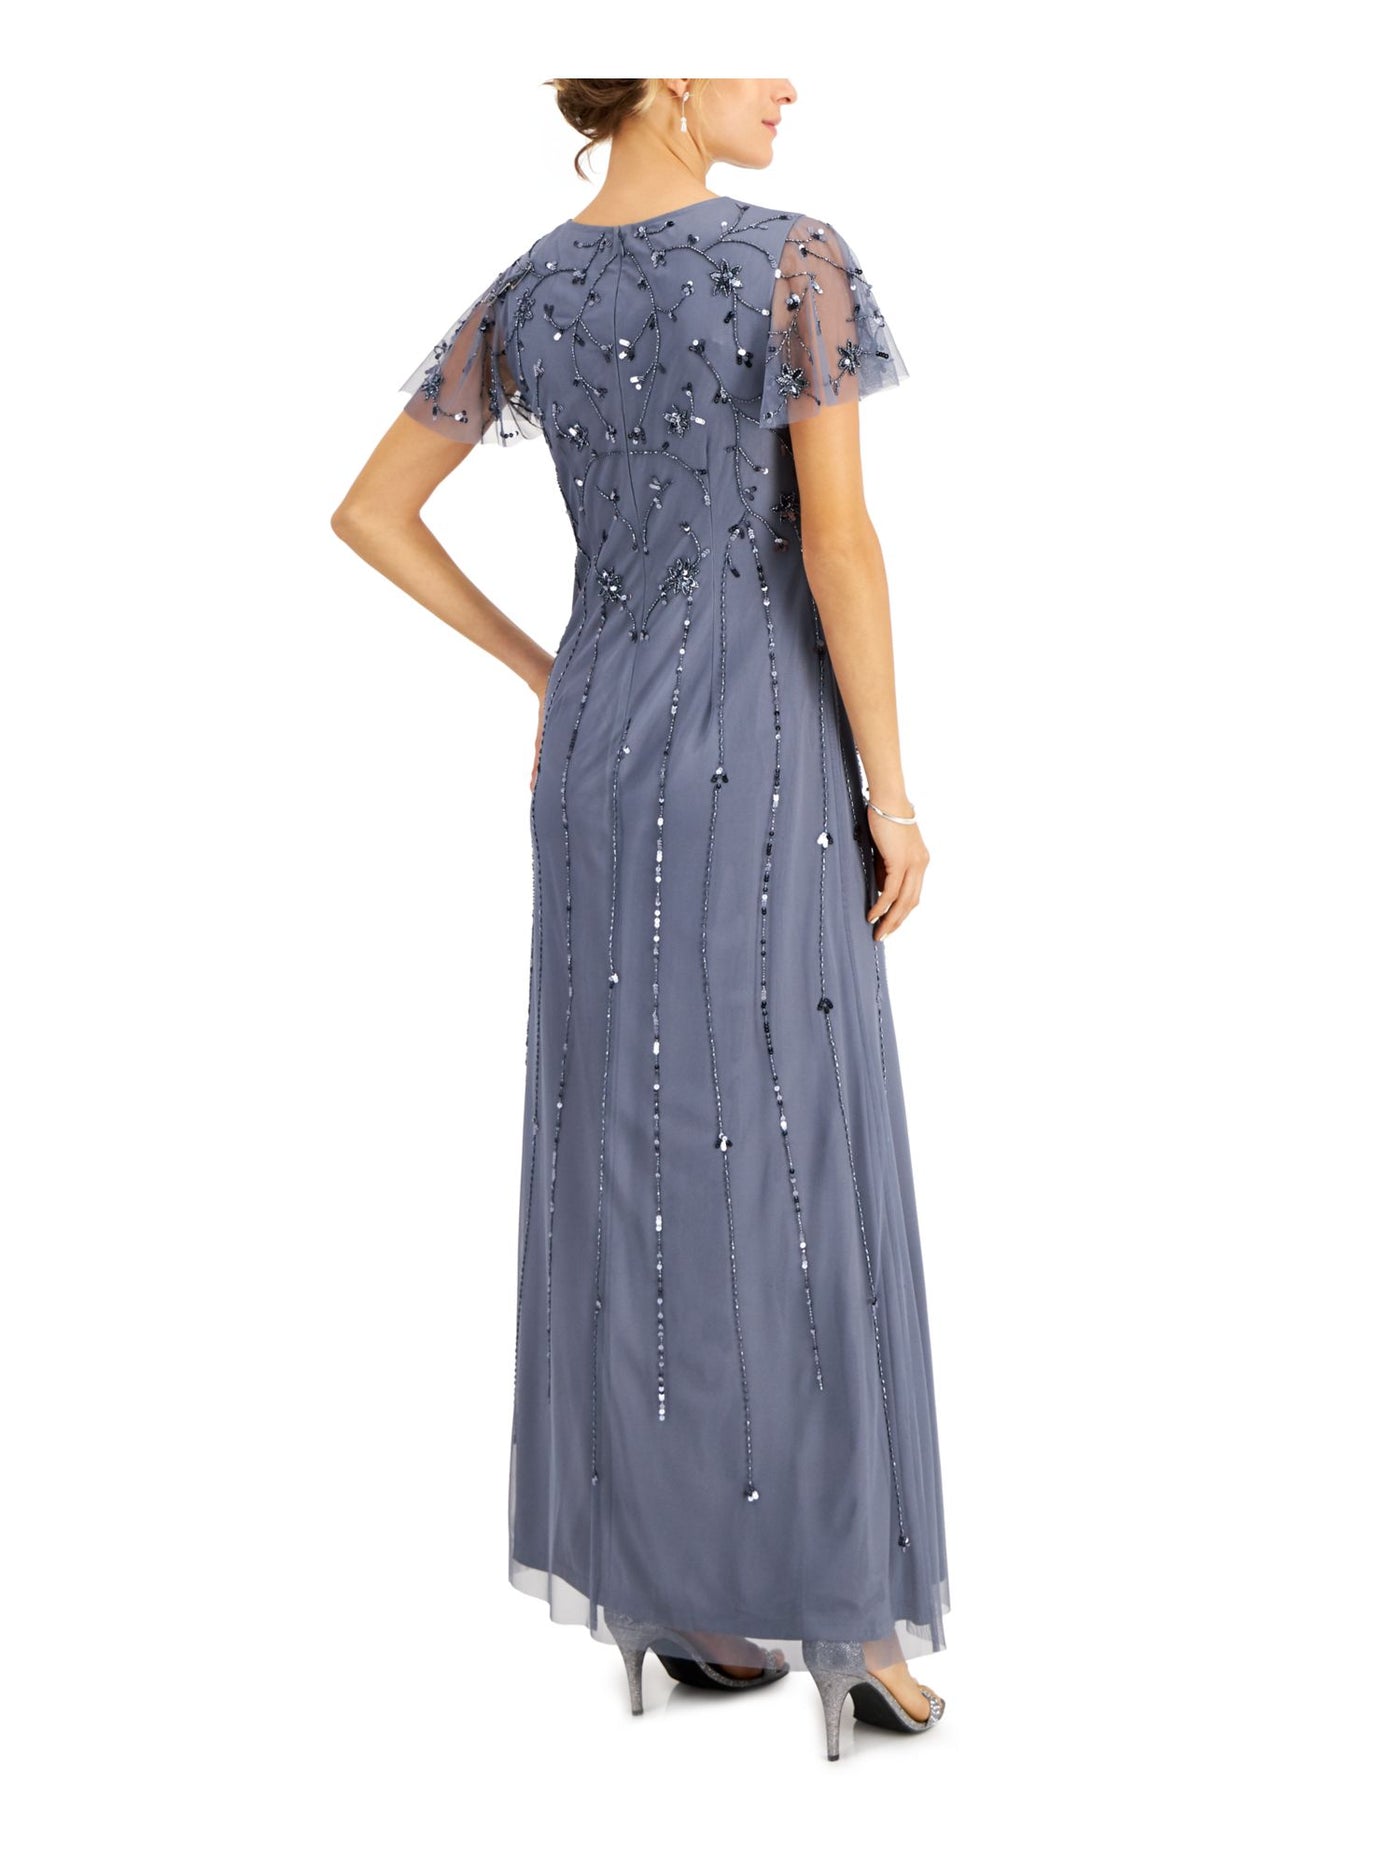 PAPELL STUDIO Womens Light Blue Embellished Zippered Lined Flutter Sleeve Round Neck Full-Length Formal Gown Dress 8